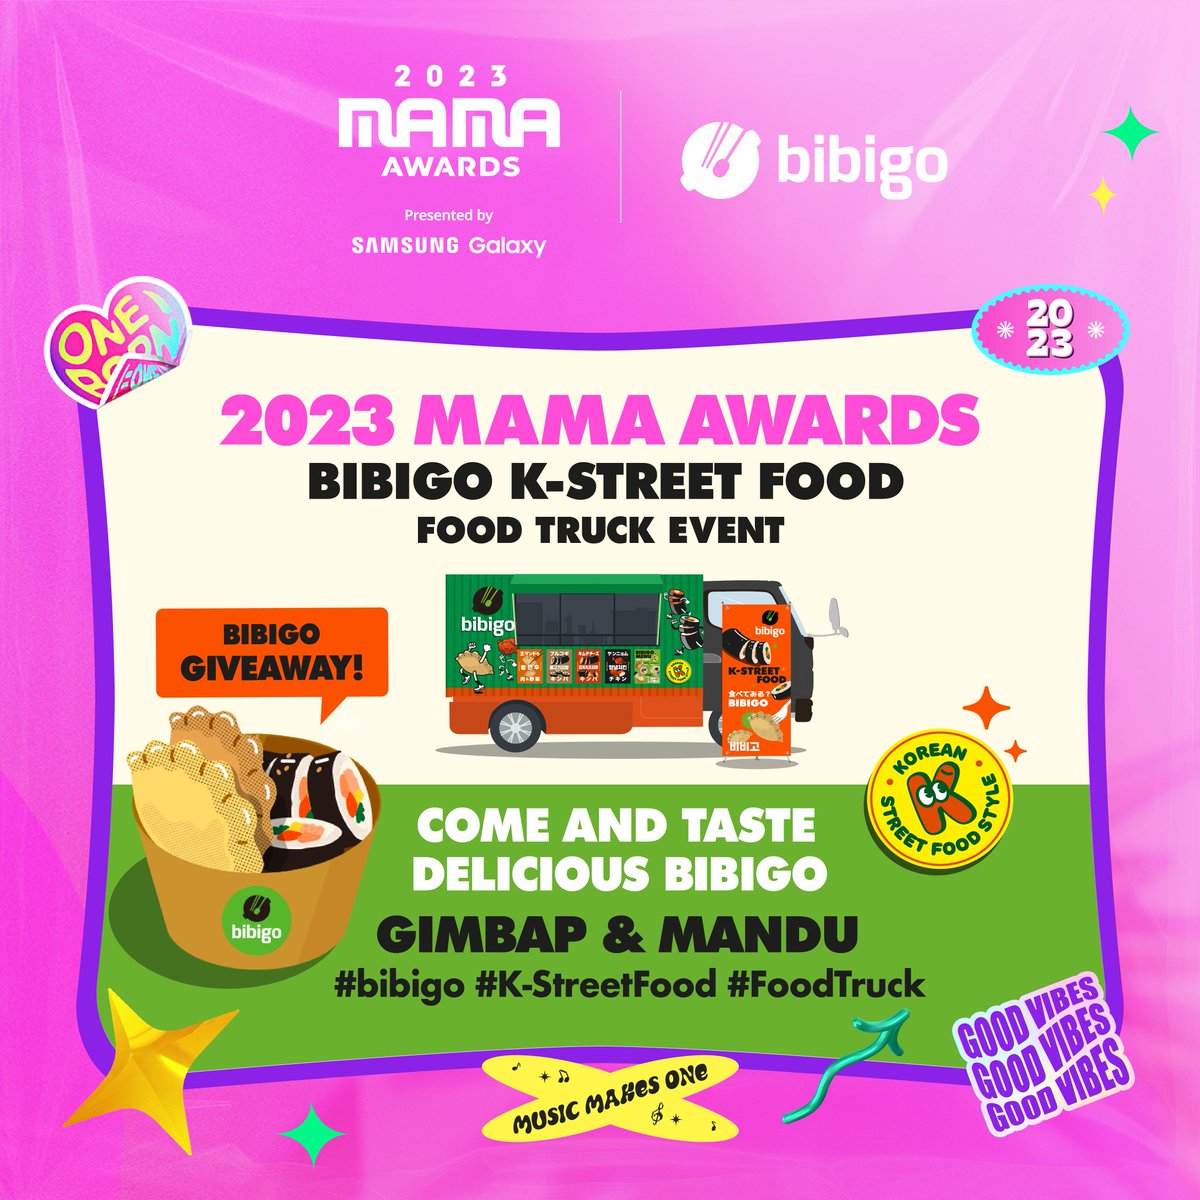 [#2023MAMA] Don’t forget to visit the bibigo Food Truck near Gate 25. 
Come and taste delicious bibigo Gimbap & Mandu!
For more information, visit @bibigoJP

#bibigo #LiveDelicious

ONE I BORN
2023 MAMA AWARDS
2023.11.28(TUE)-29(WED) 6PM(KST)

#MAMAAWARDS #2023MAMAAWARDS